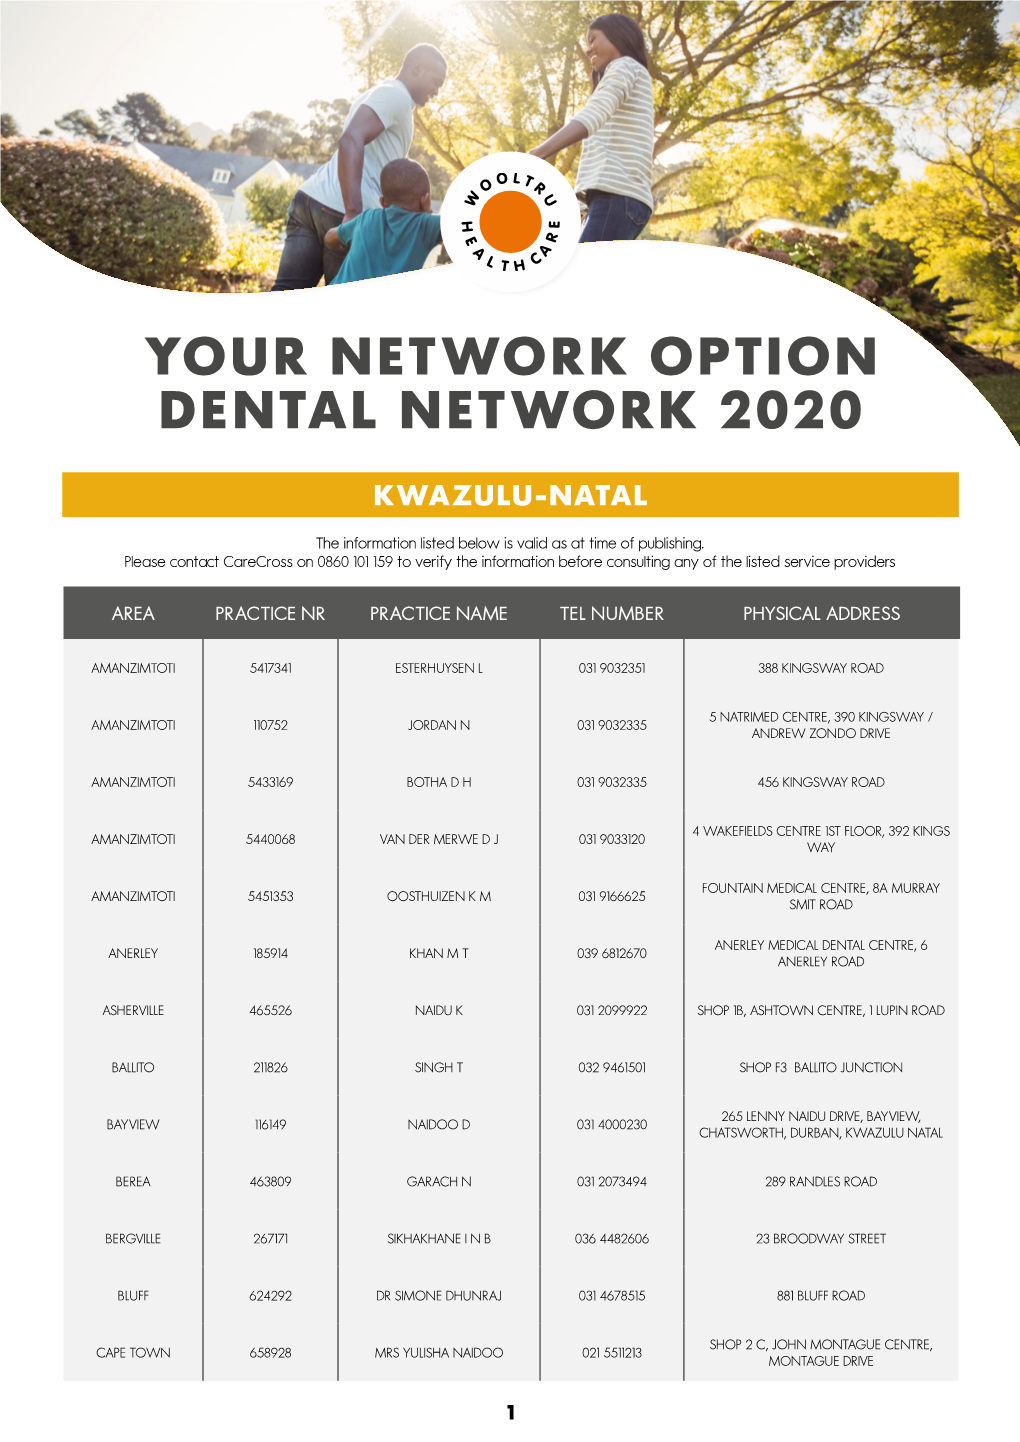 Your Network Option Dental Network 2020